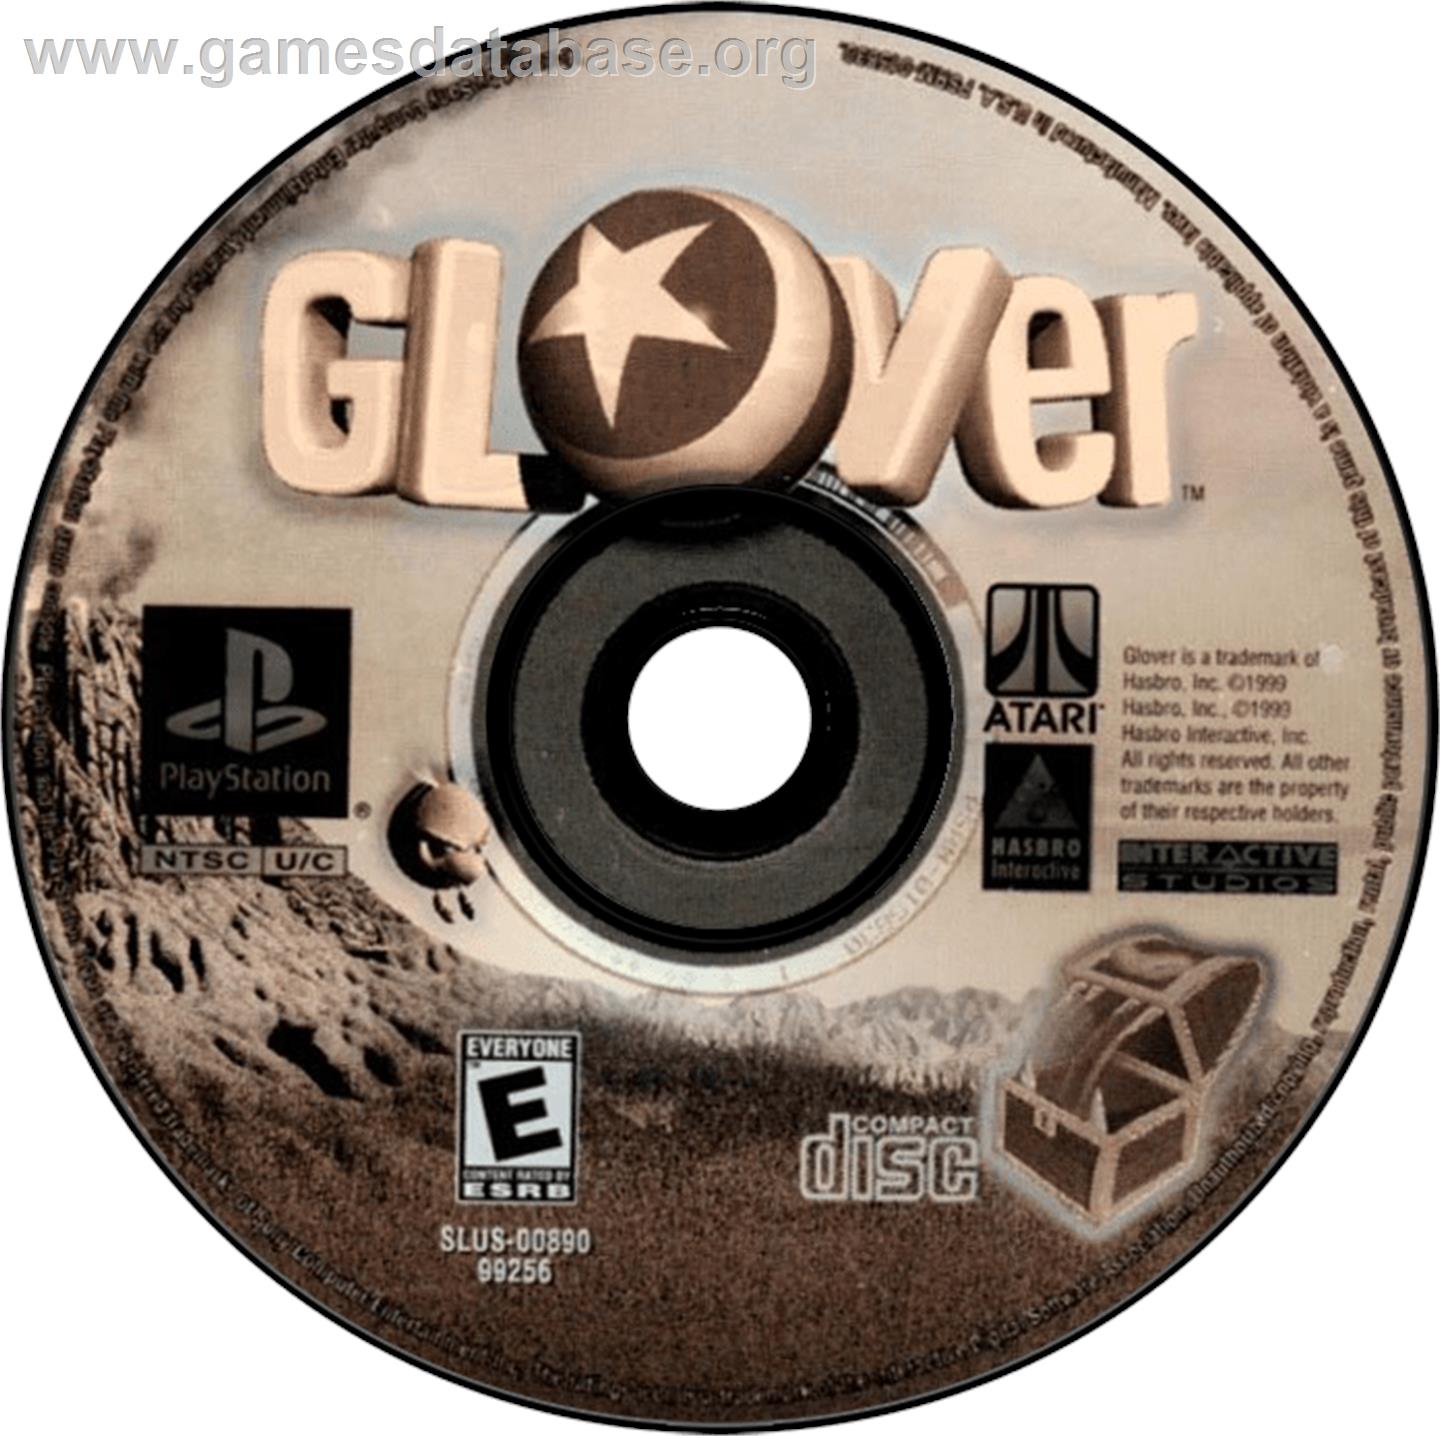 Glover - Sony Playstation - Artwork - Disc